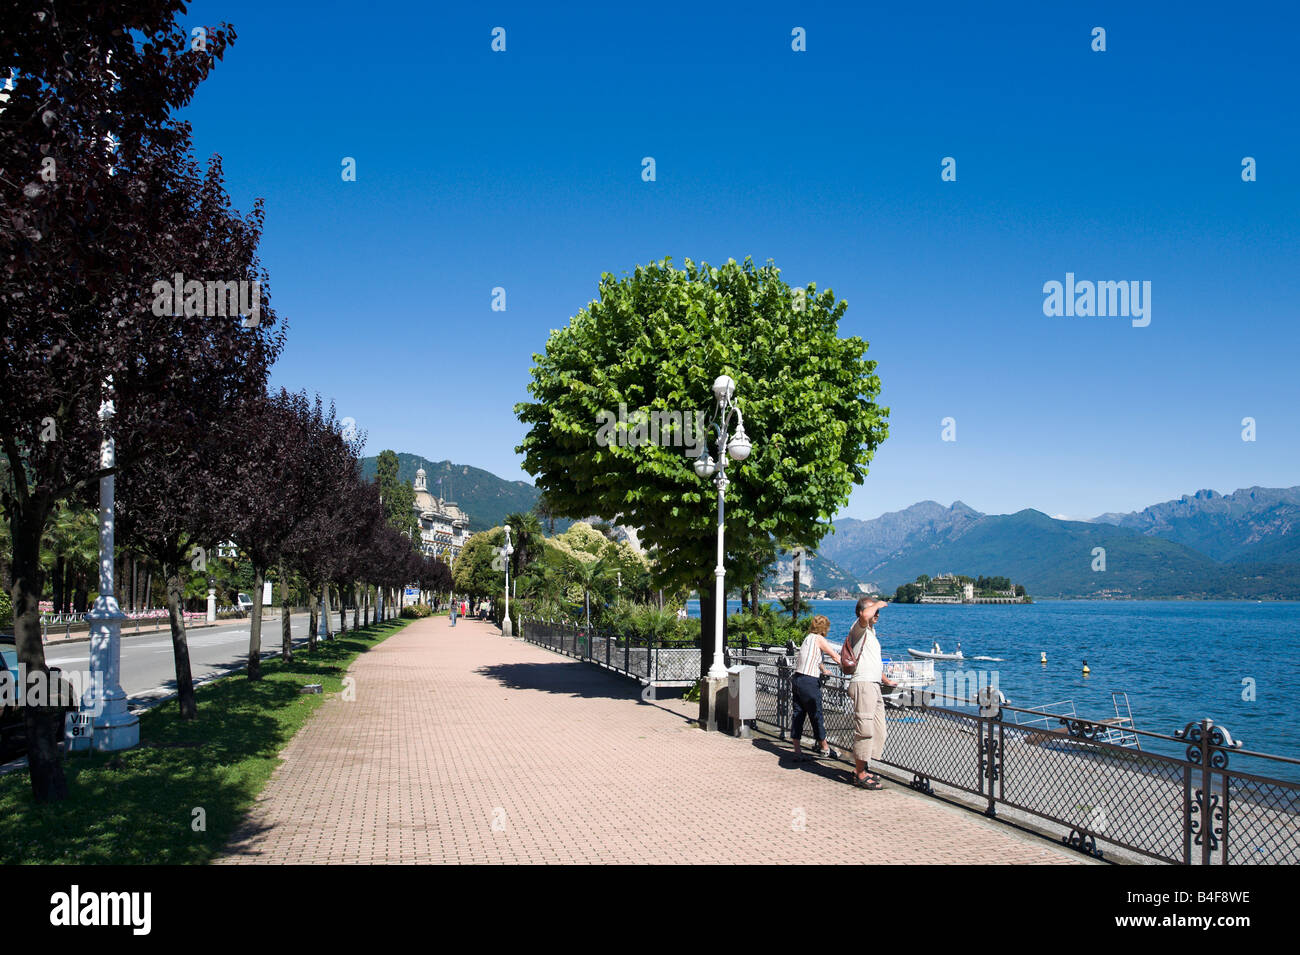 Promenade on the lakefront at Stresa looking towards Isole Borromee Lake Maggiore Italy Stock Photo